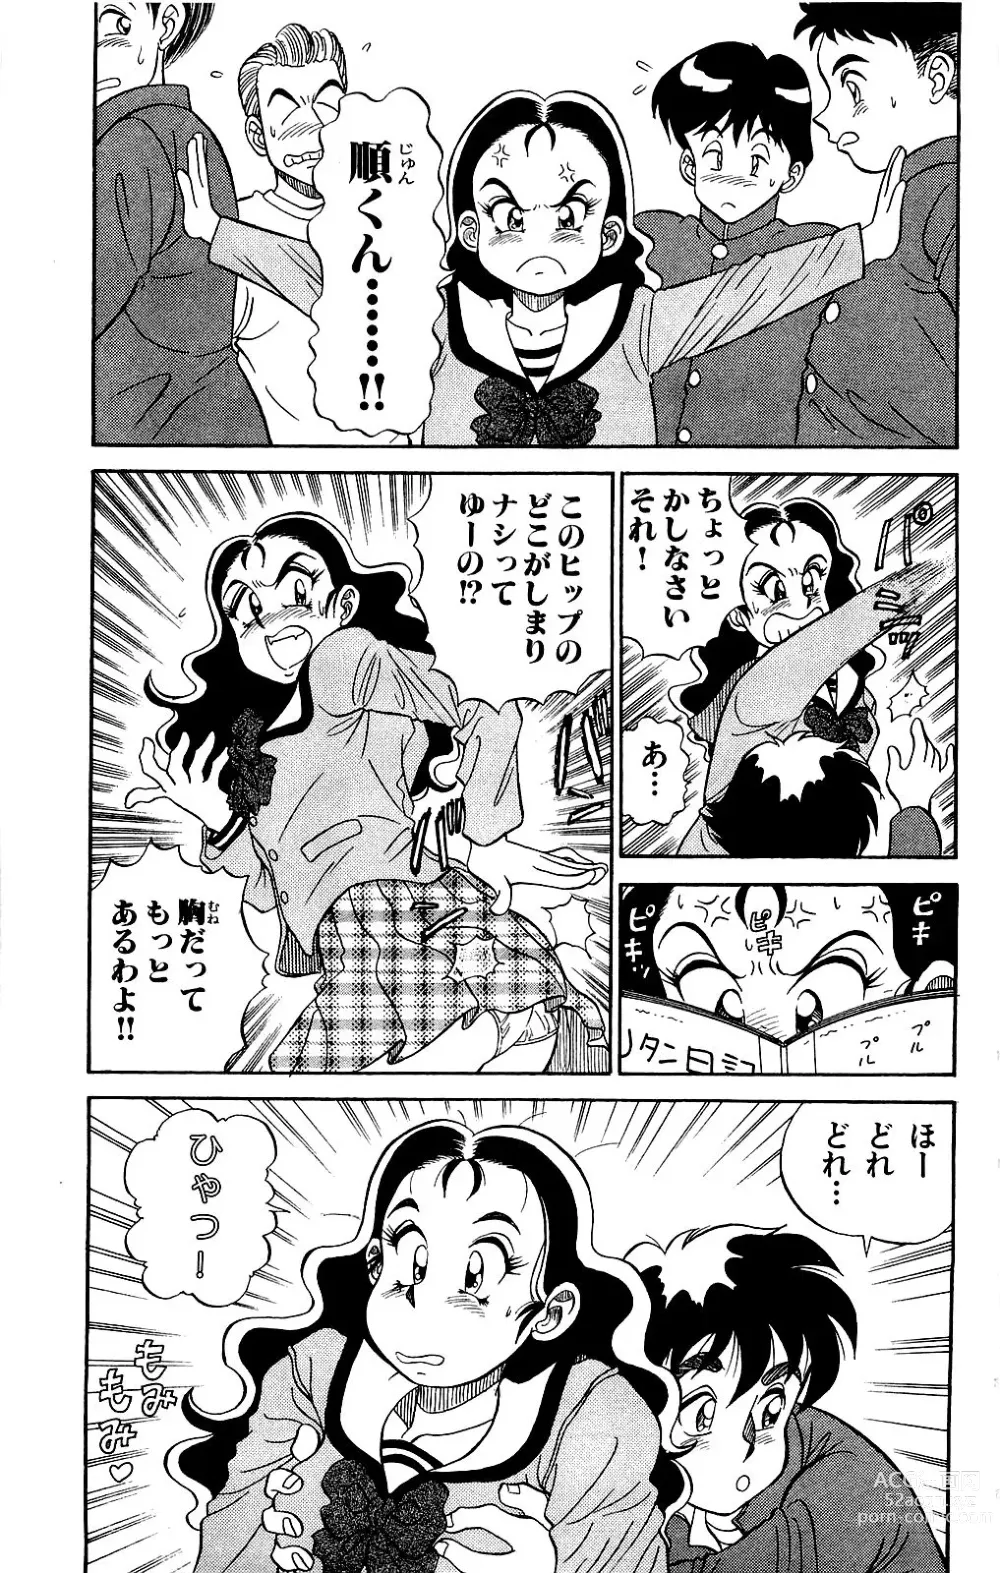 Page 11 of manga Orette Piyoritan Vol. 1